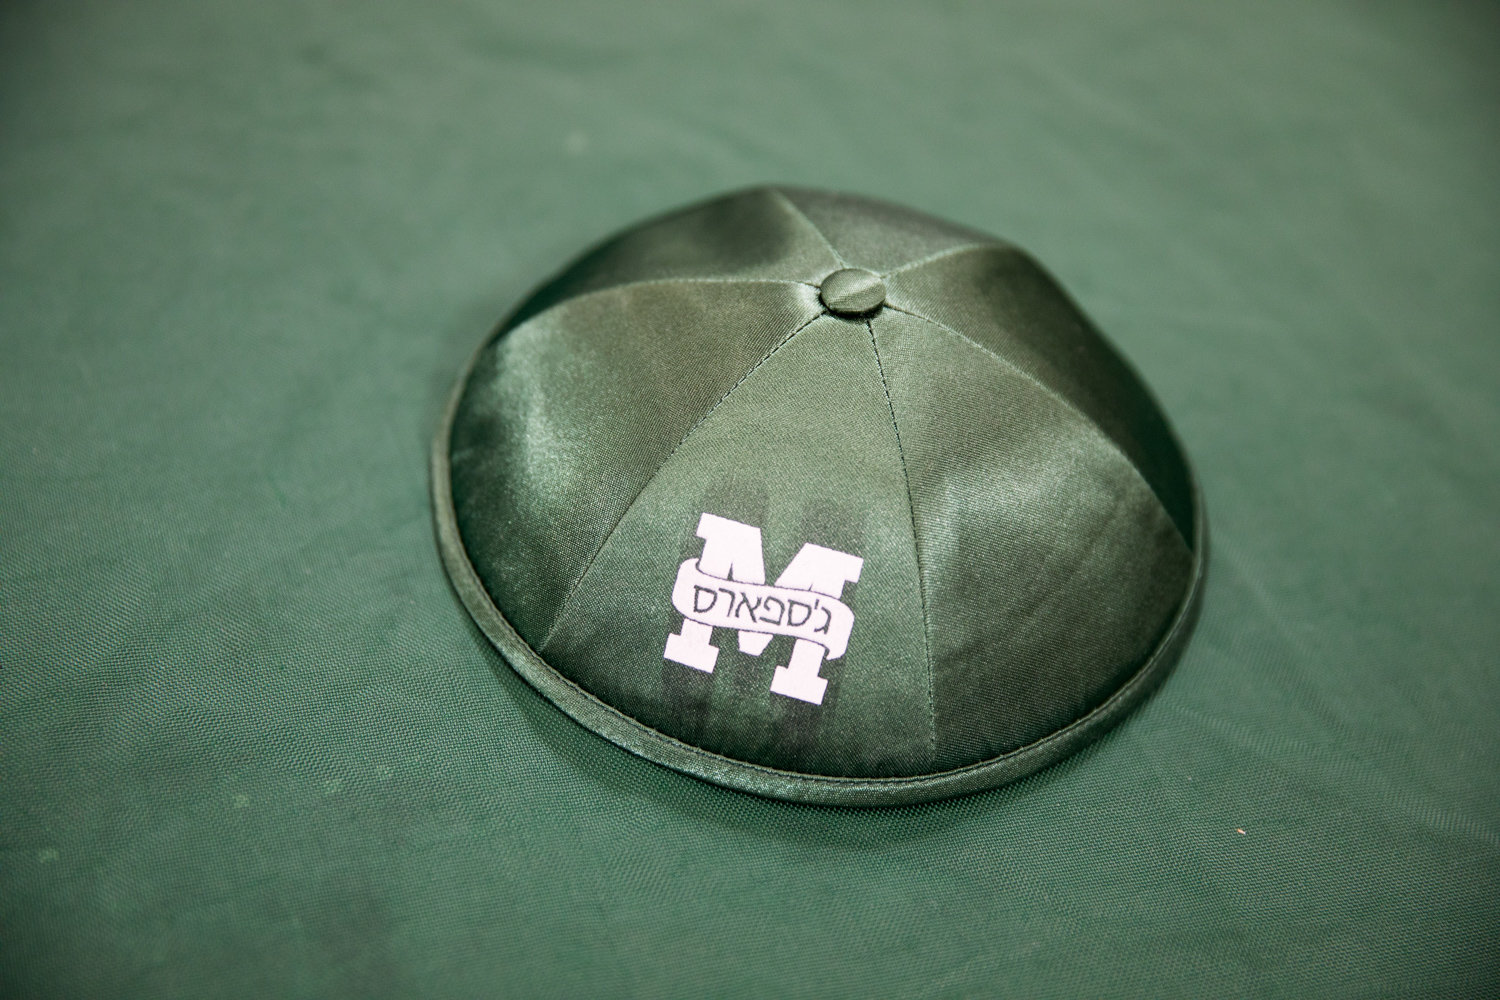 Manhattan players Daniel Schreier and Ethan Lasko own custom yarmulkes featuring the Jaspers’ logo.